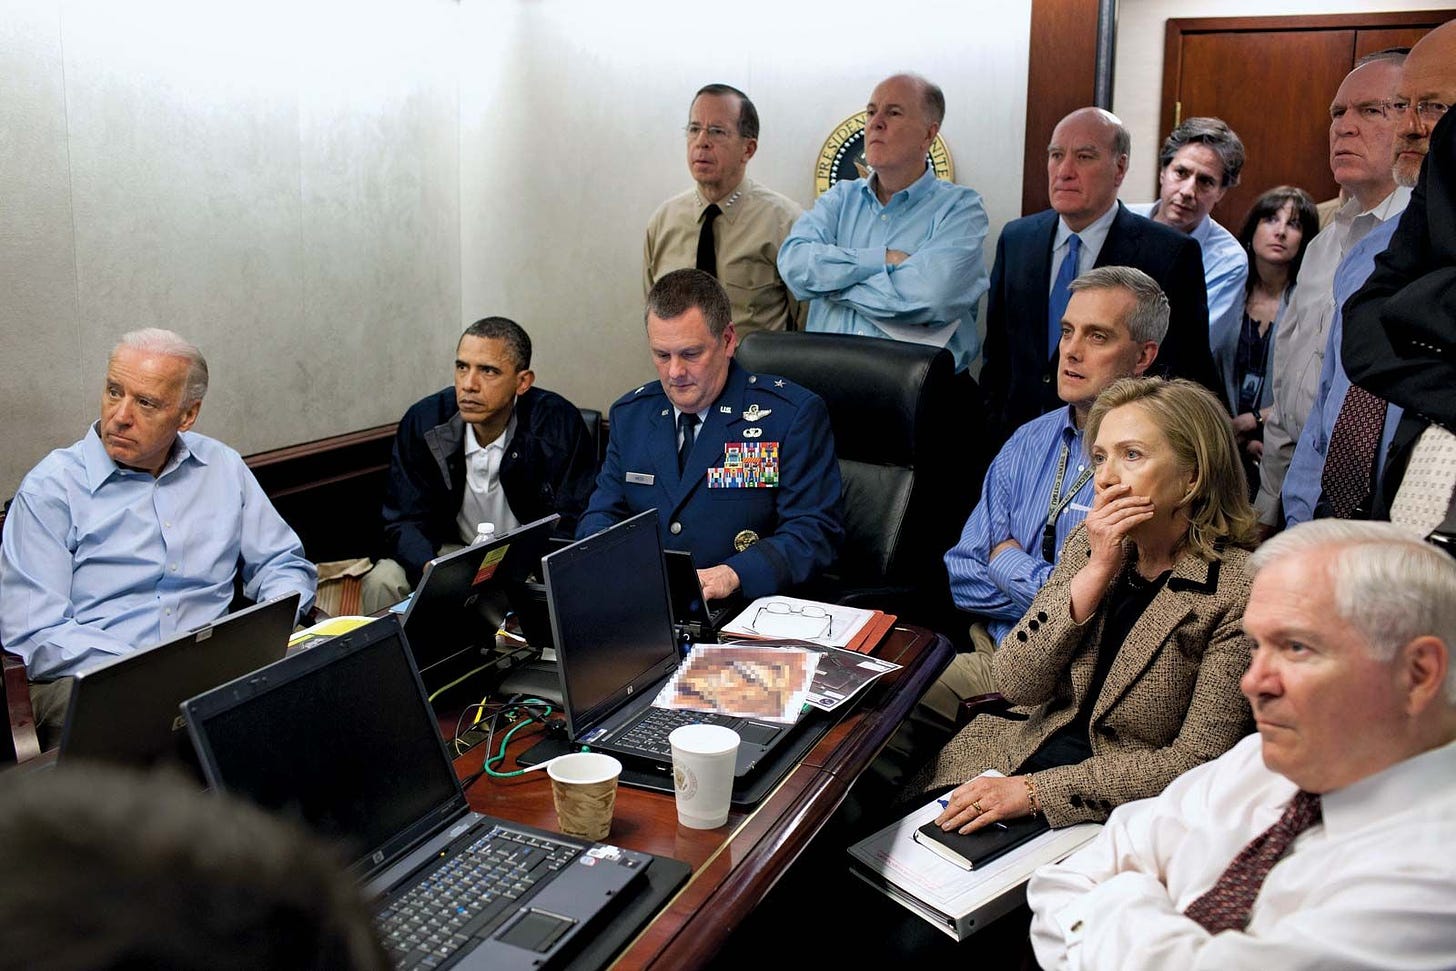 Obama and Hillary Faking bin Laden Raid https://www.britannica.com/biography/Barack-Obama/Wars-in-Iraq-and-Afghanistan